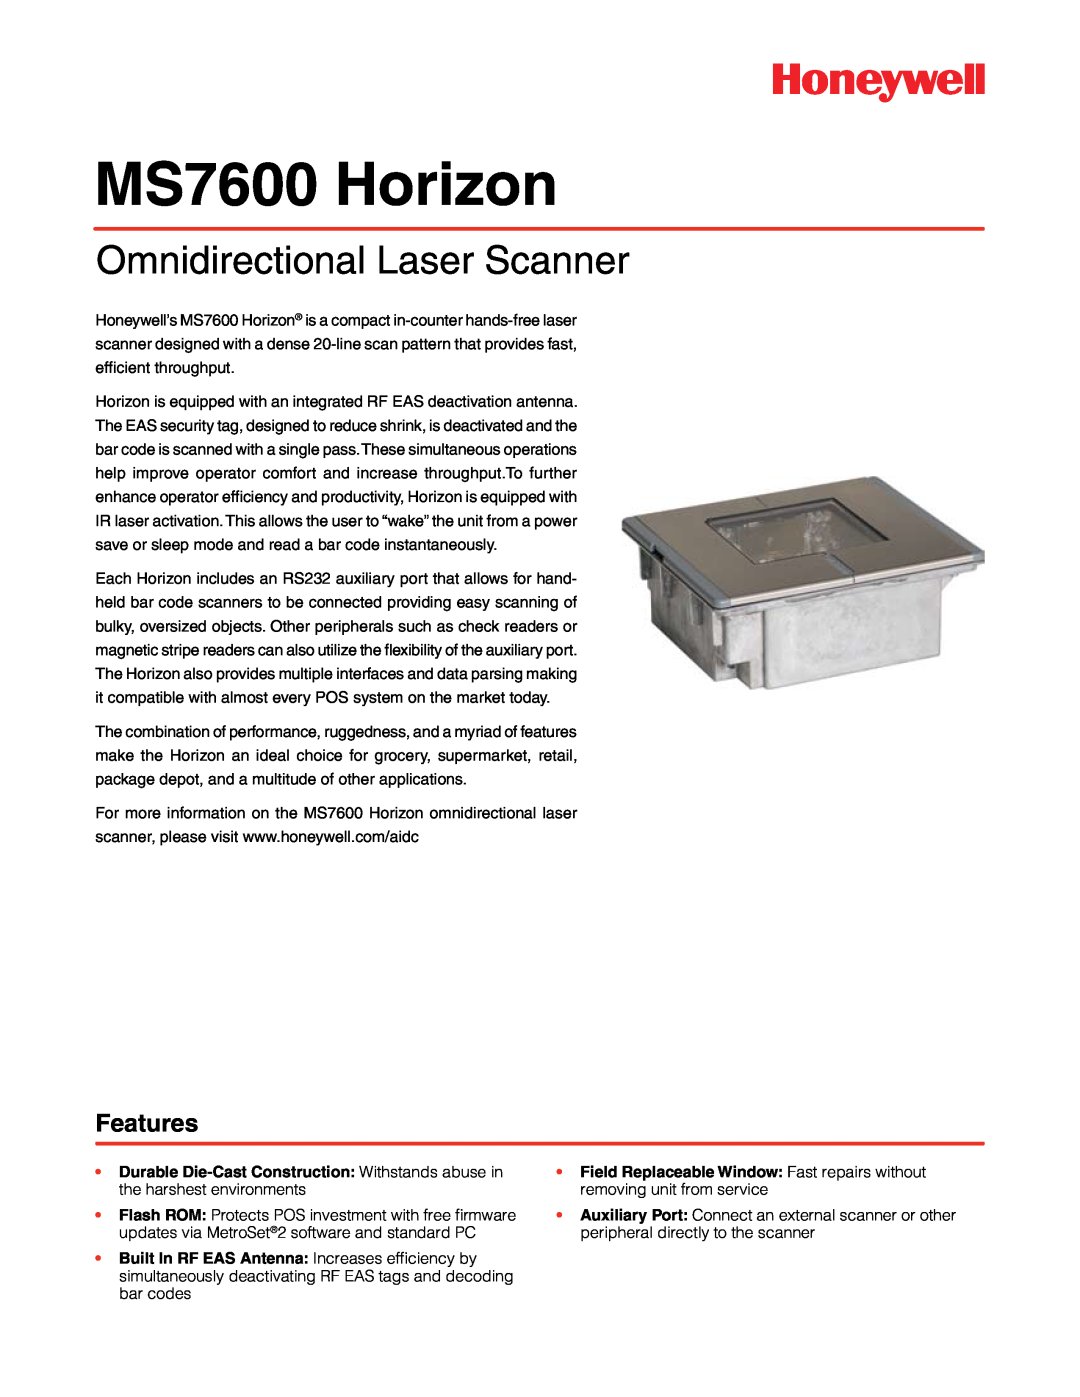 Honeywell manual MS7600 Horizon, Omnidirectional Laser Scanner, Features 